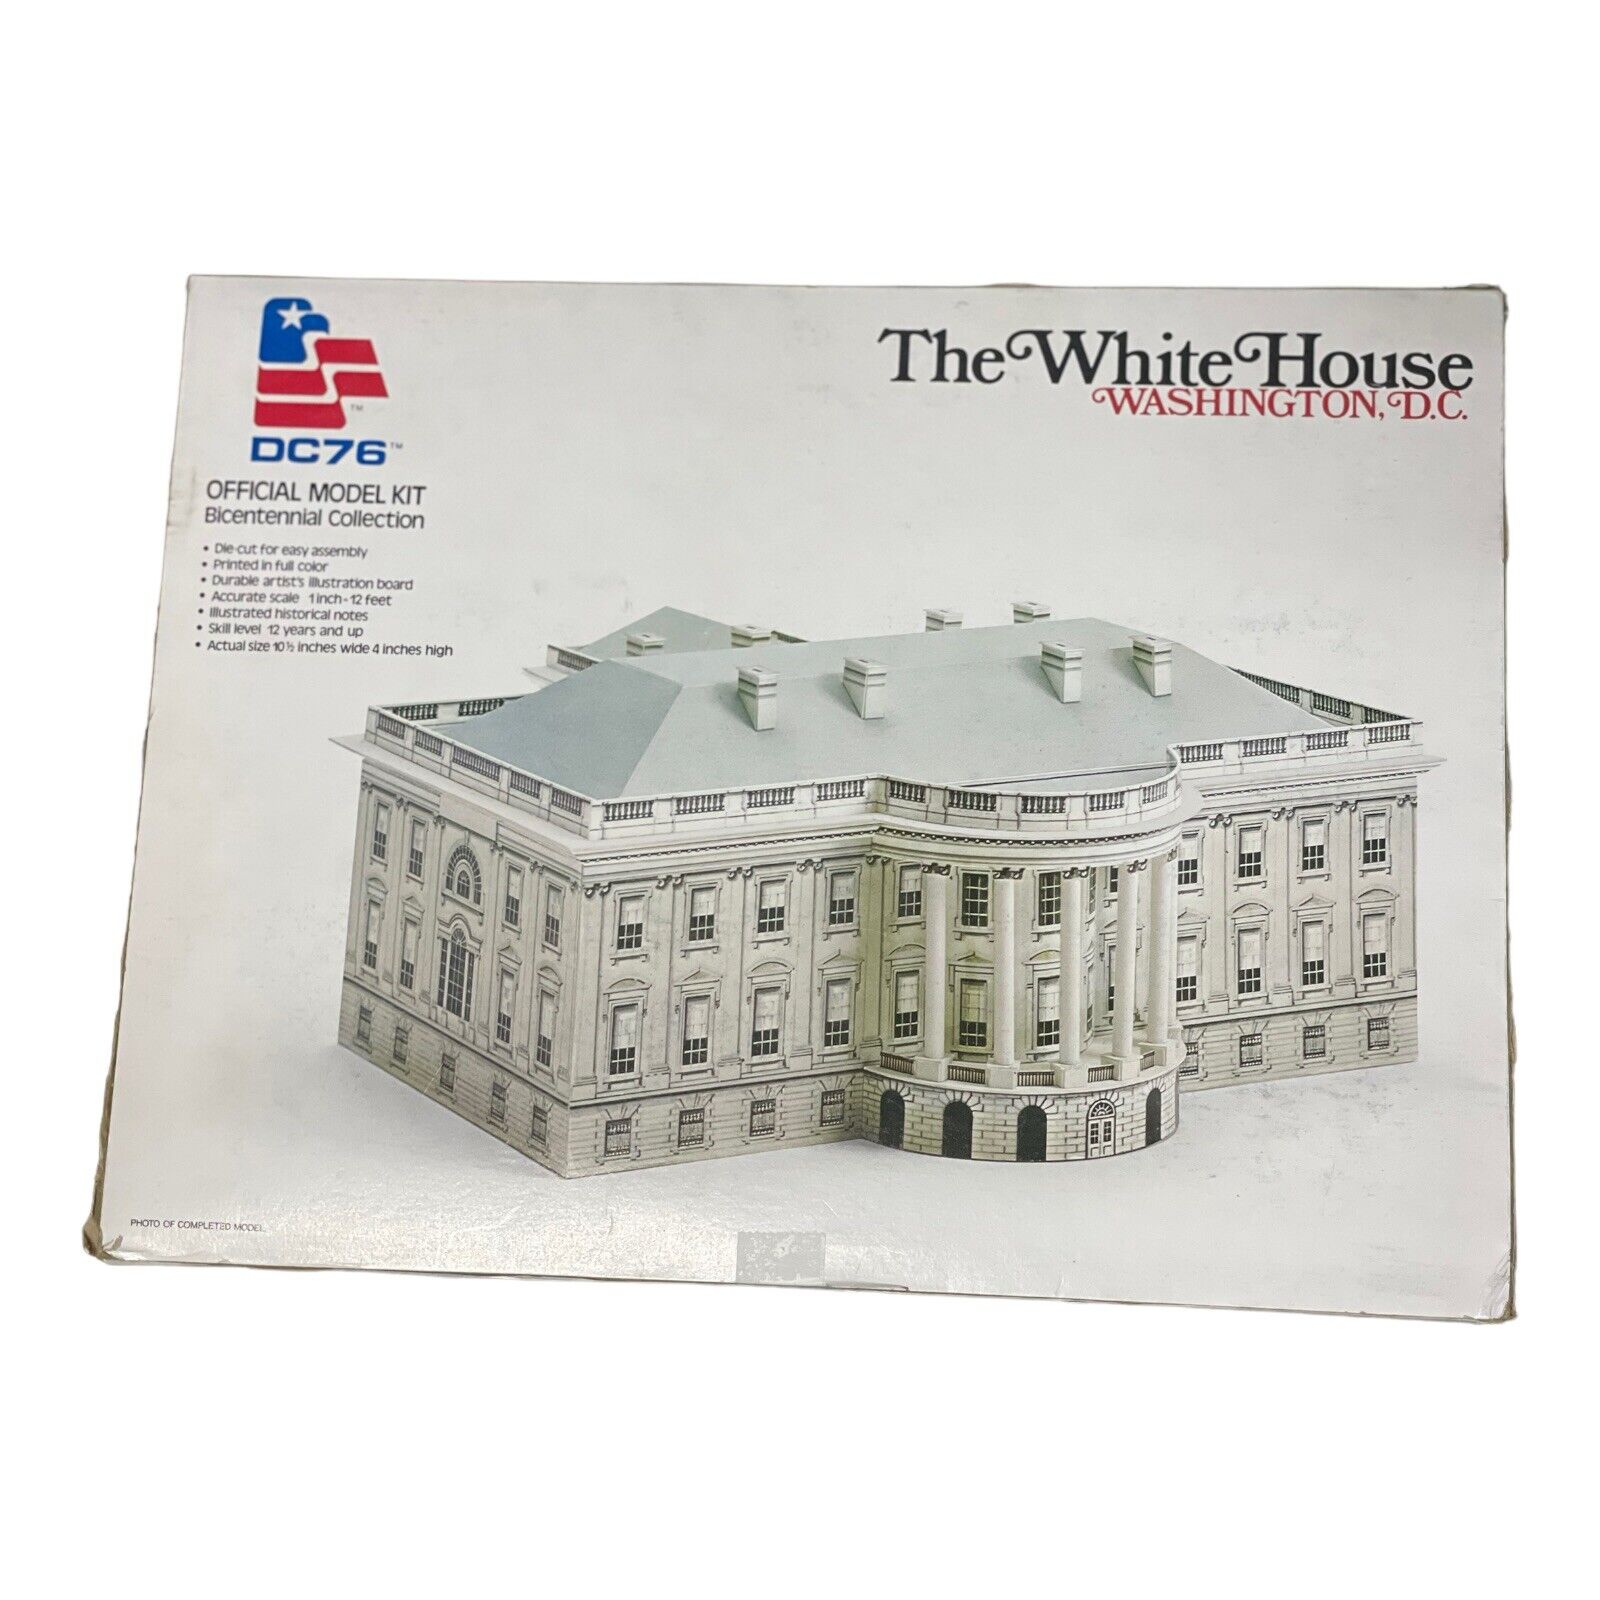 WHITE HOUSE DC76 Landmark Model Kit Bicentennial Collection  Washington DC